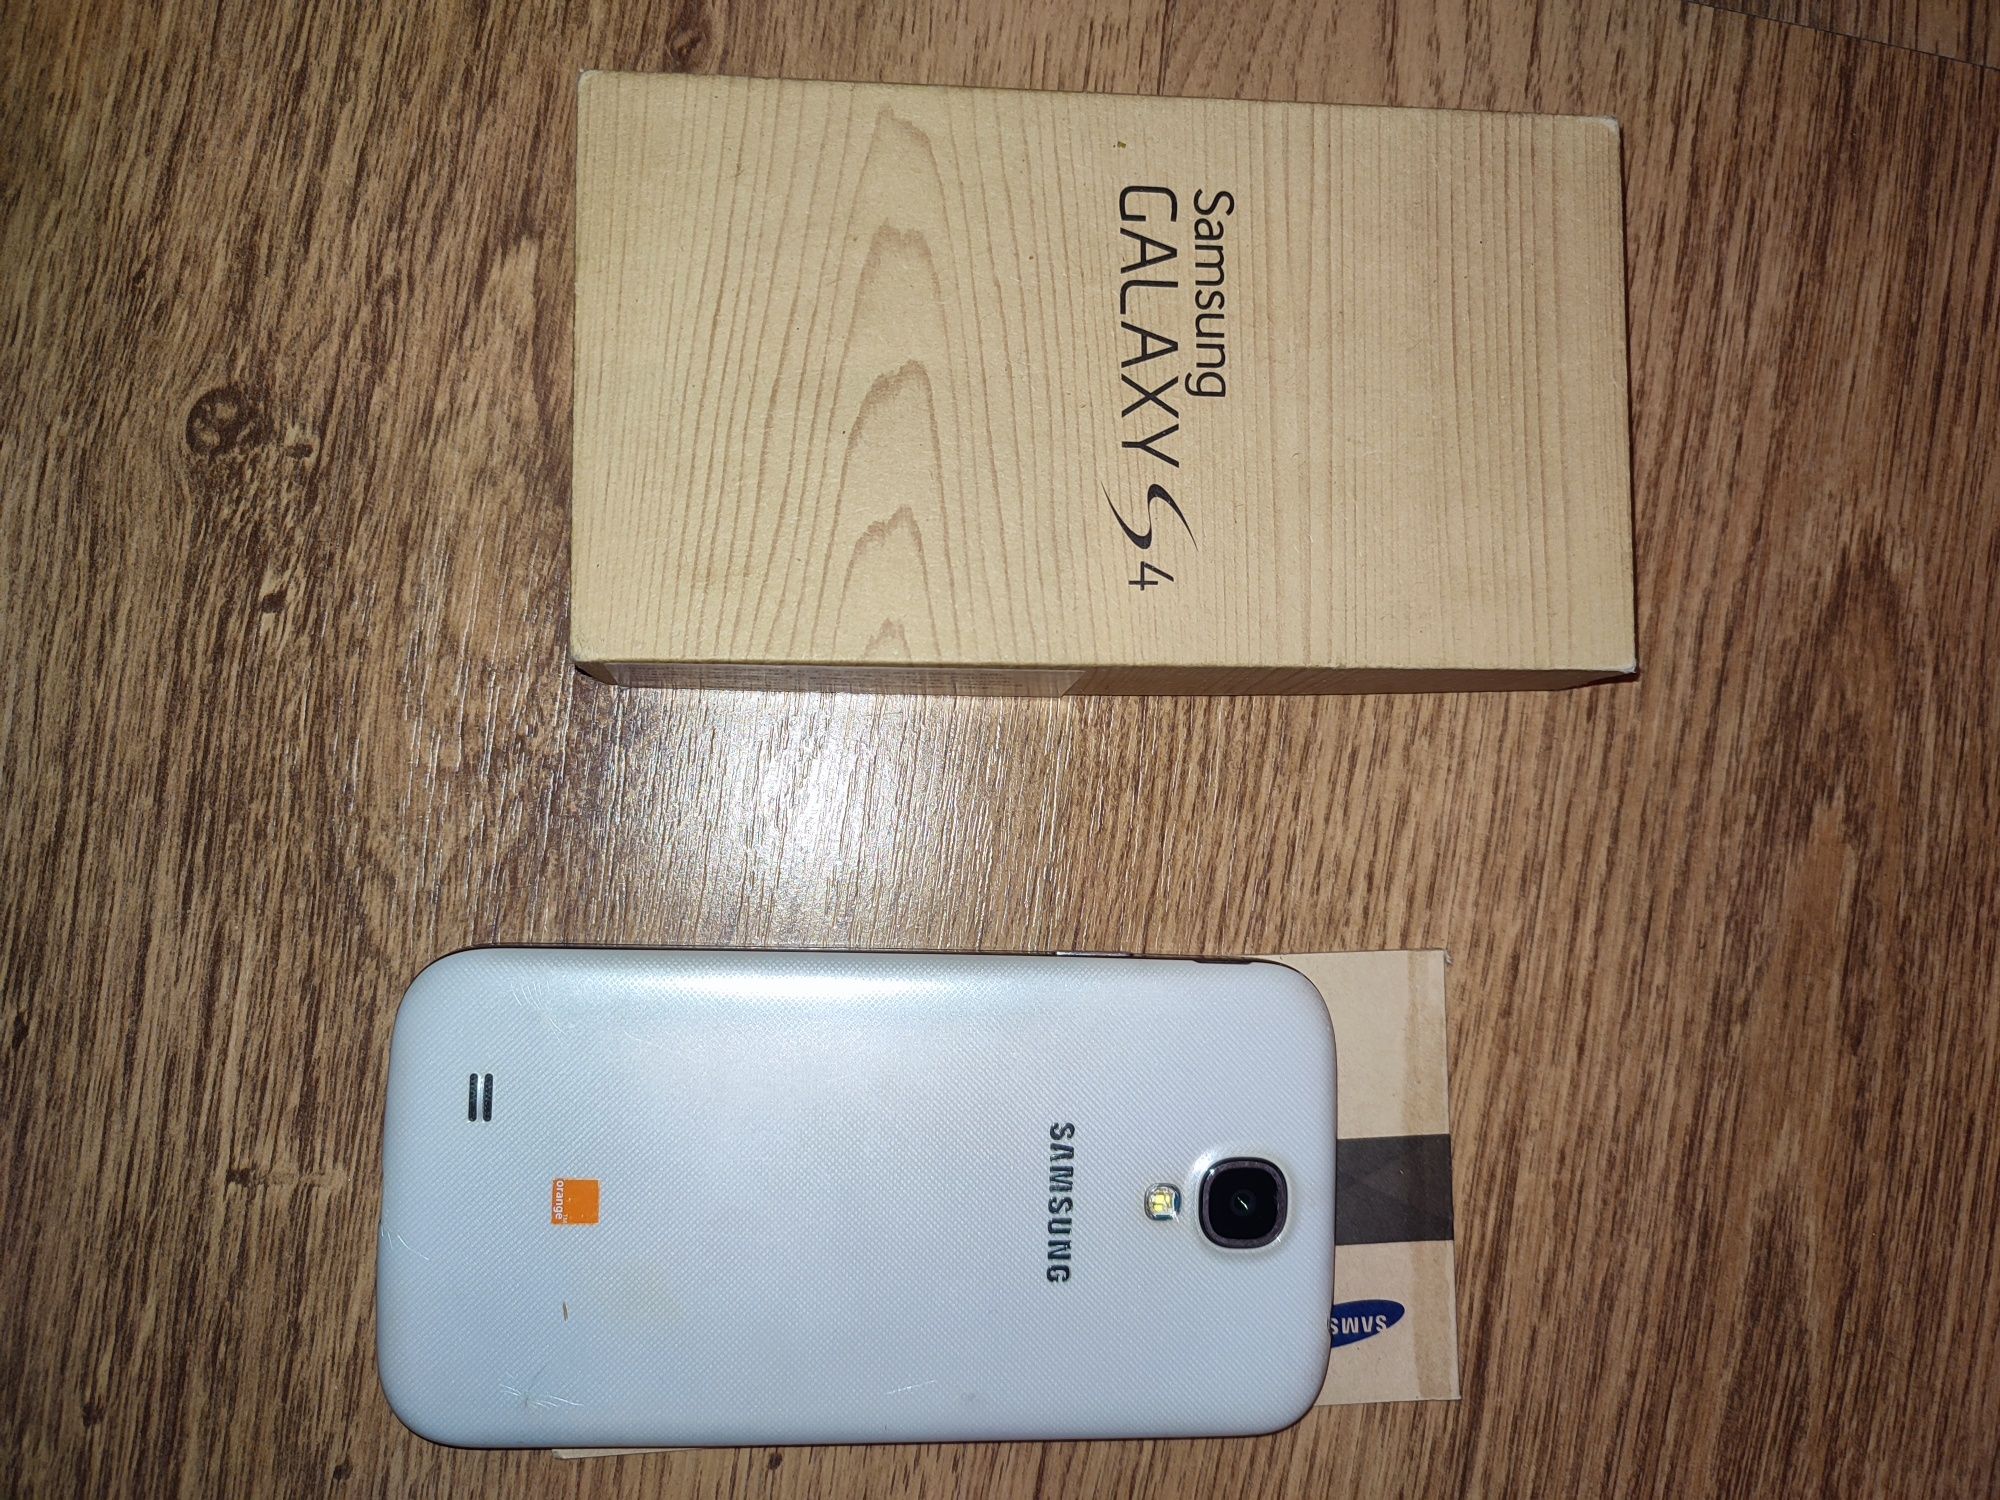 Samsung Galaxy S4, piese de schimb